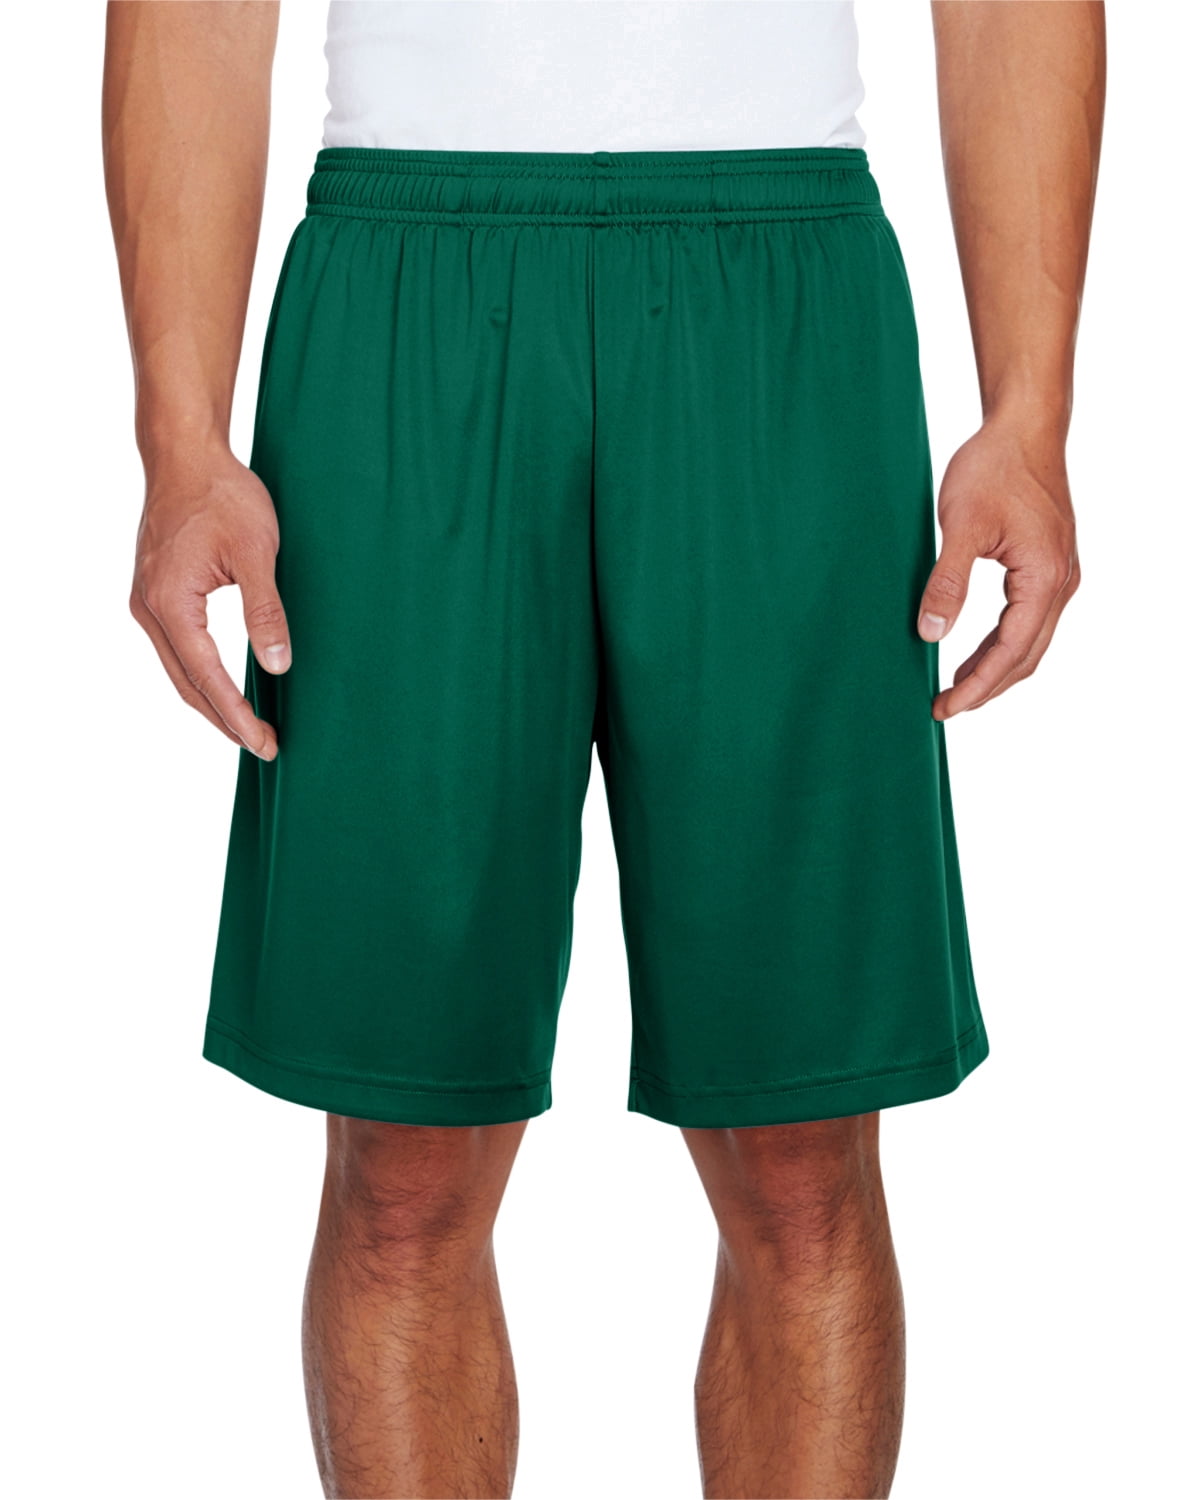 3XL Details about   Football Pants Pro Combat Sports Compression Shorts 